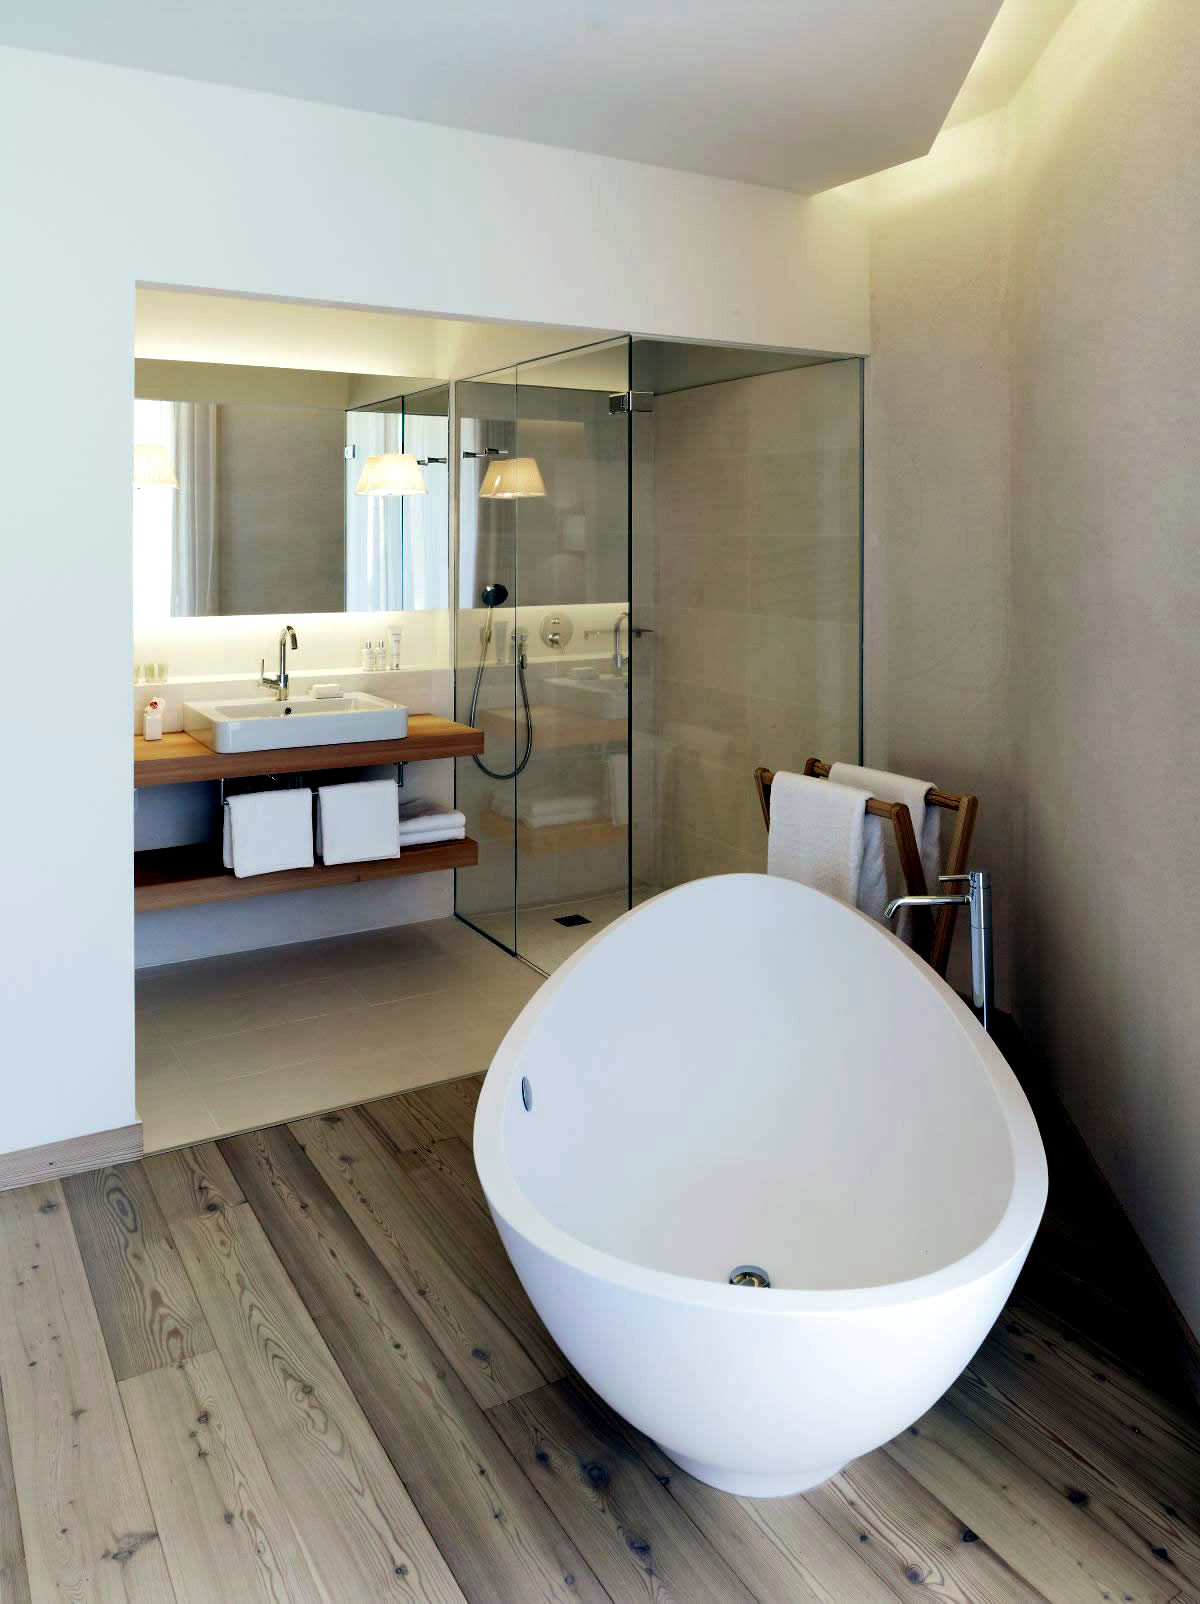 Modern Built-in bath tub with space saving design | Interior Design